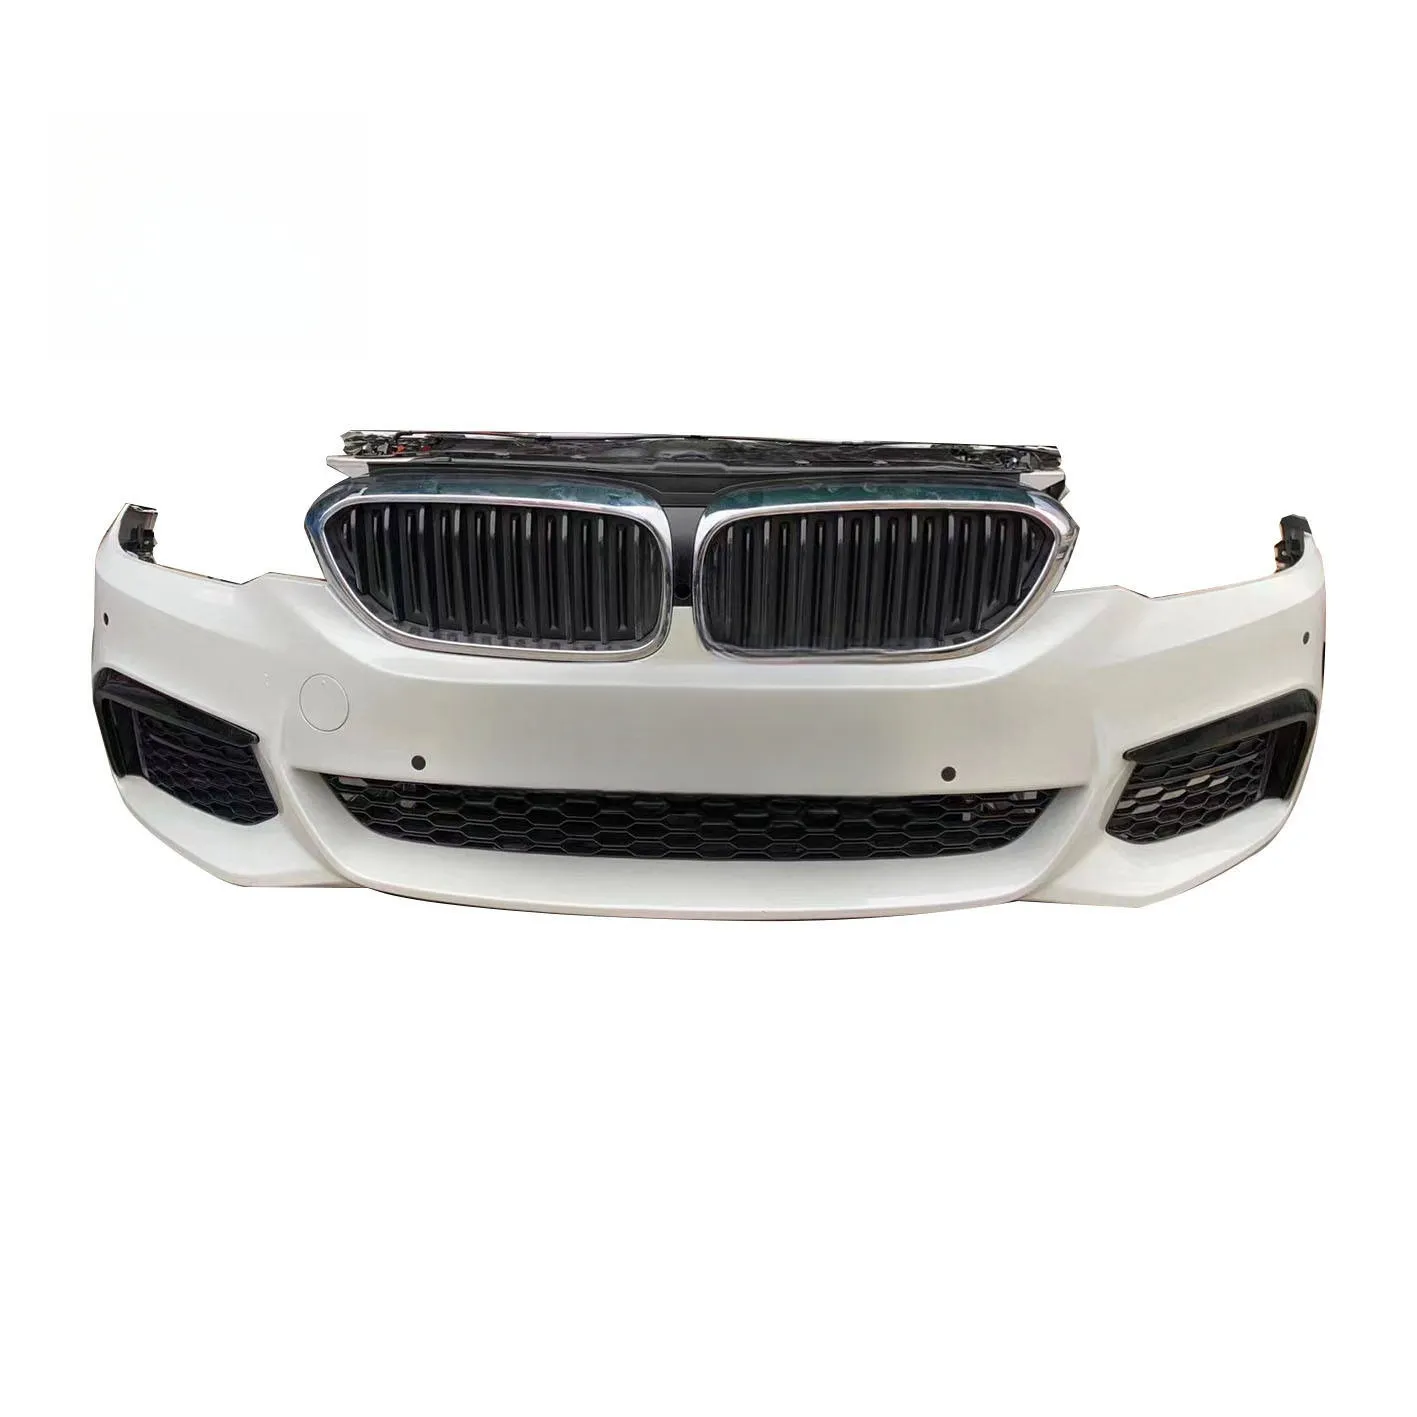 Stoßstange geeignet für BMW 5er G30 520i 530i 540i Frontstoßstange Frontkühlergrill Frontgesicht-Kit